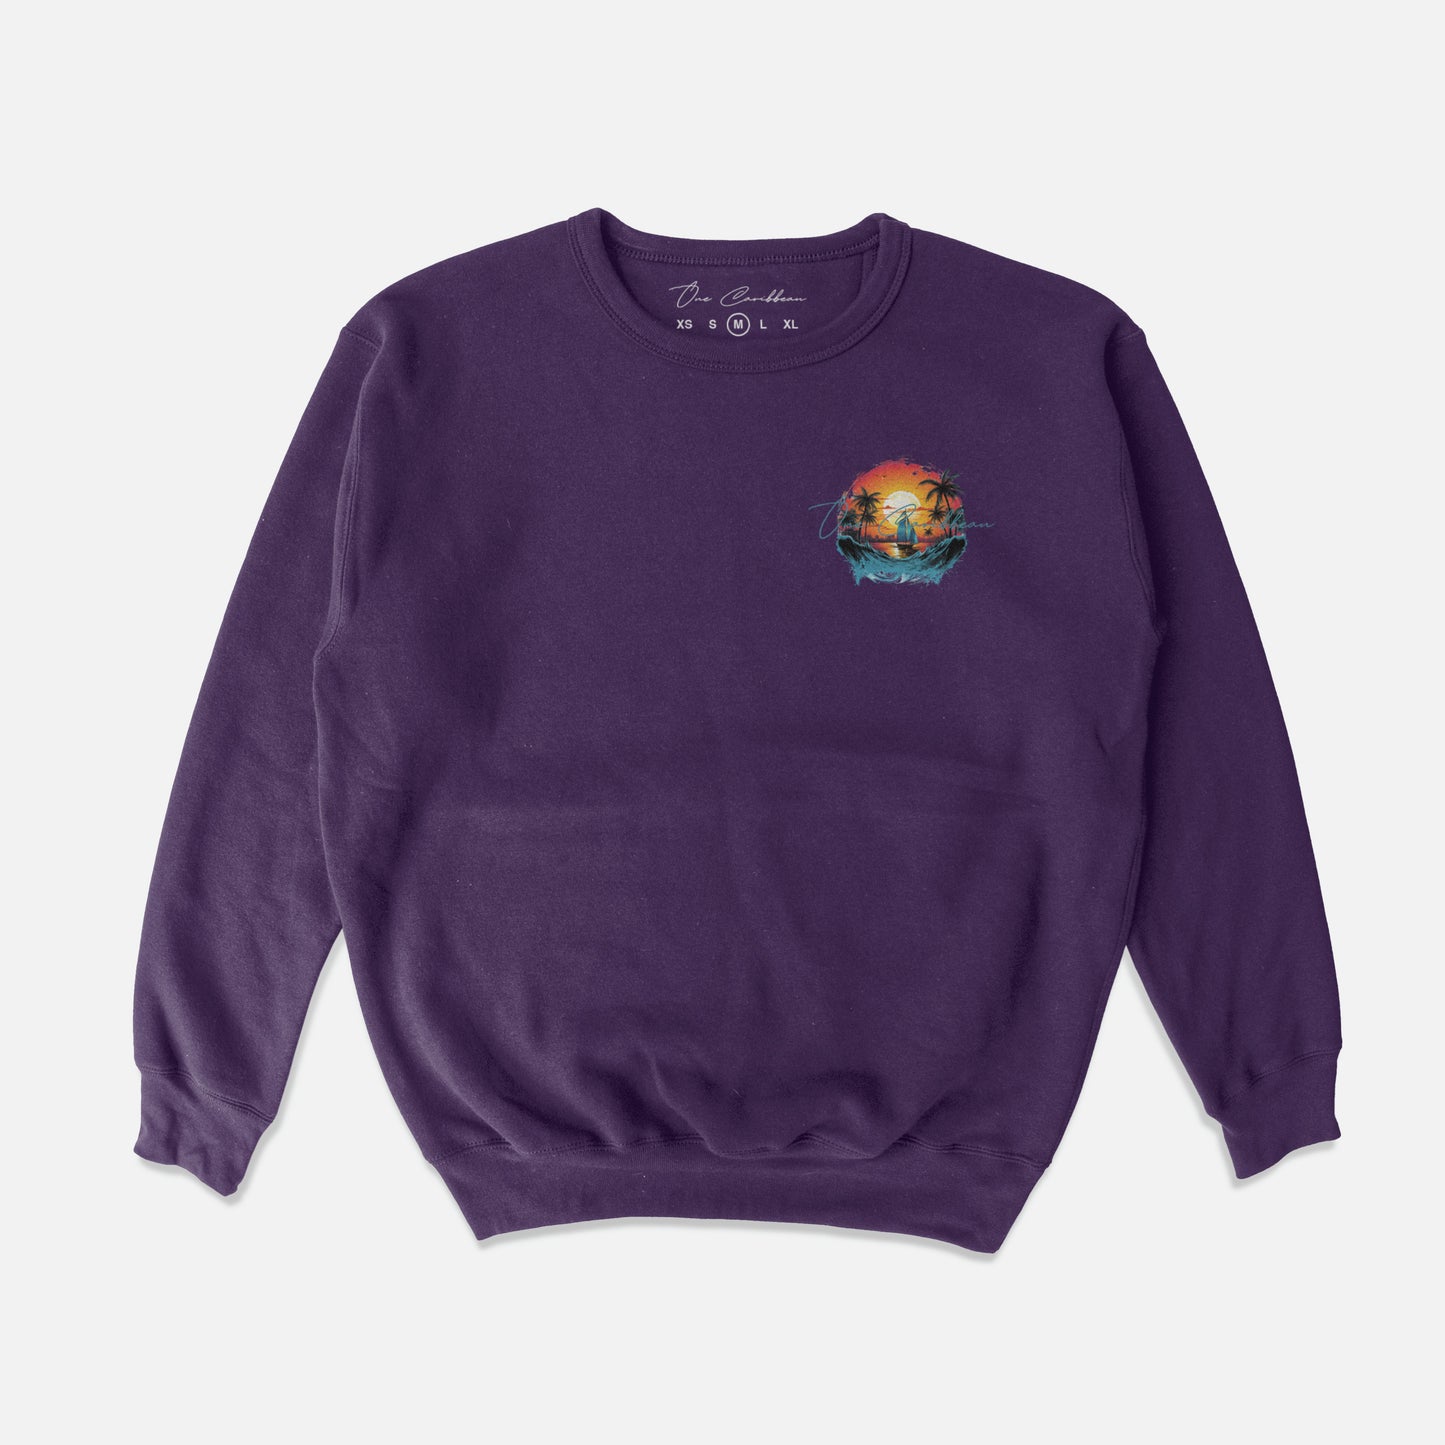 One Caribbean Graphic Sweatshirt (Caribbean Oasis)